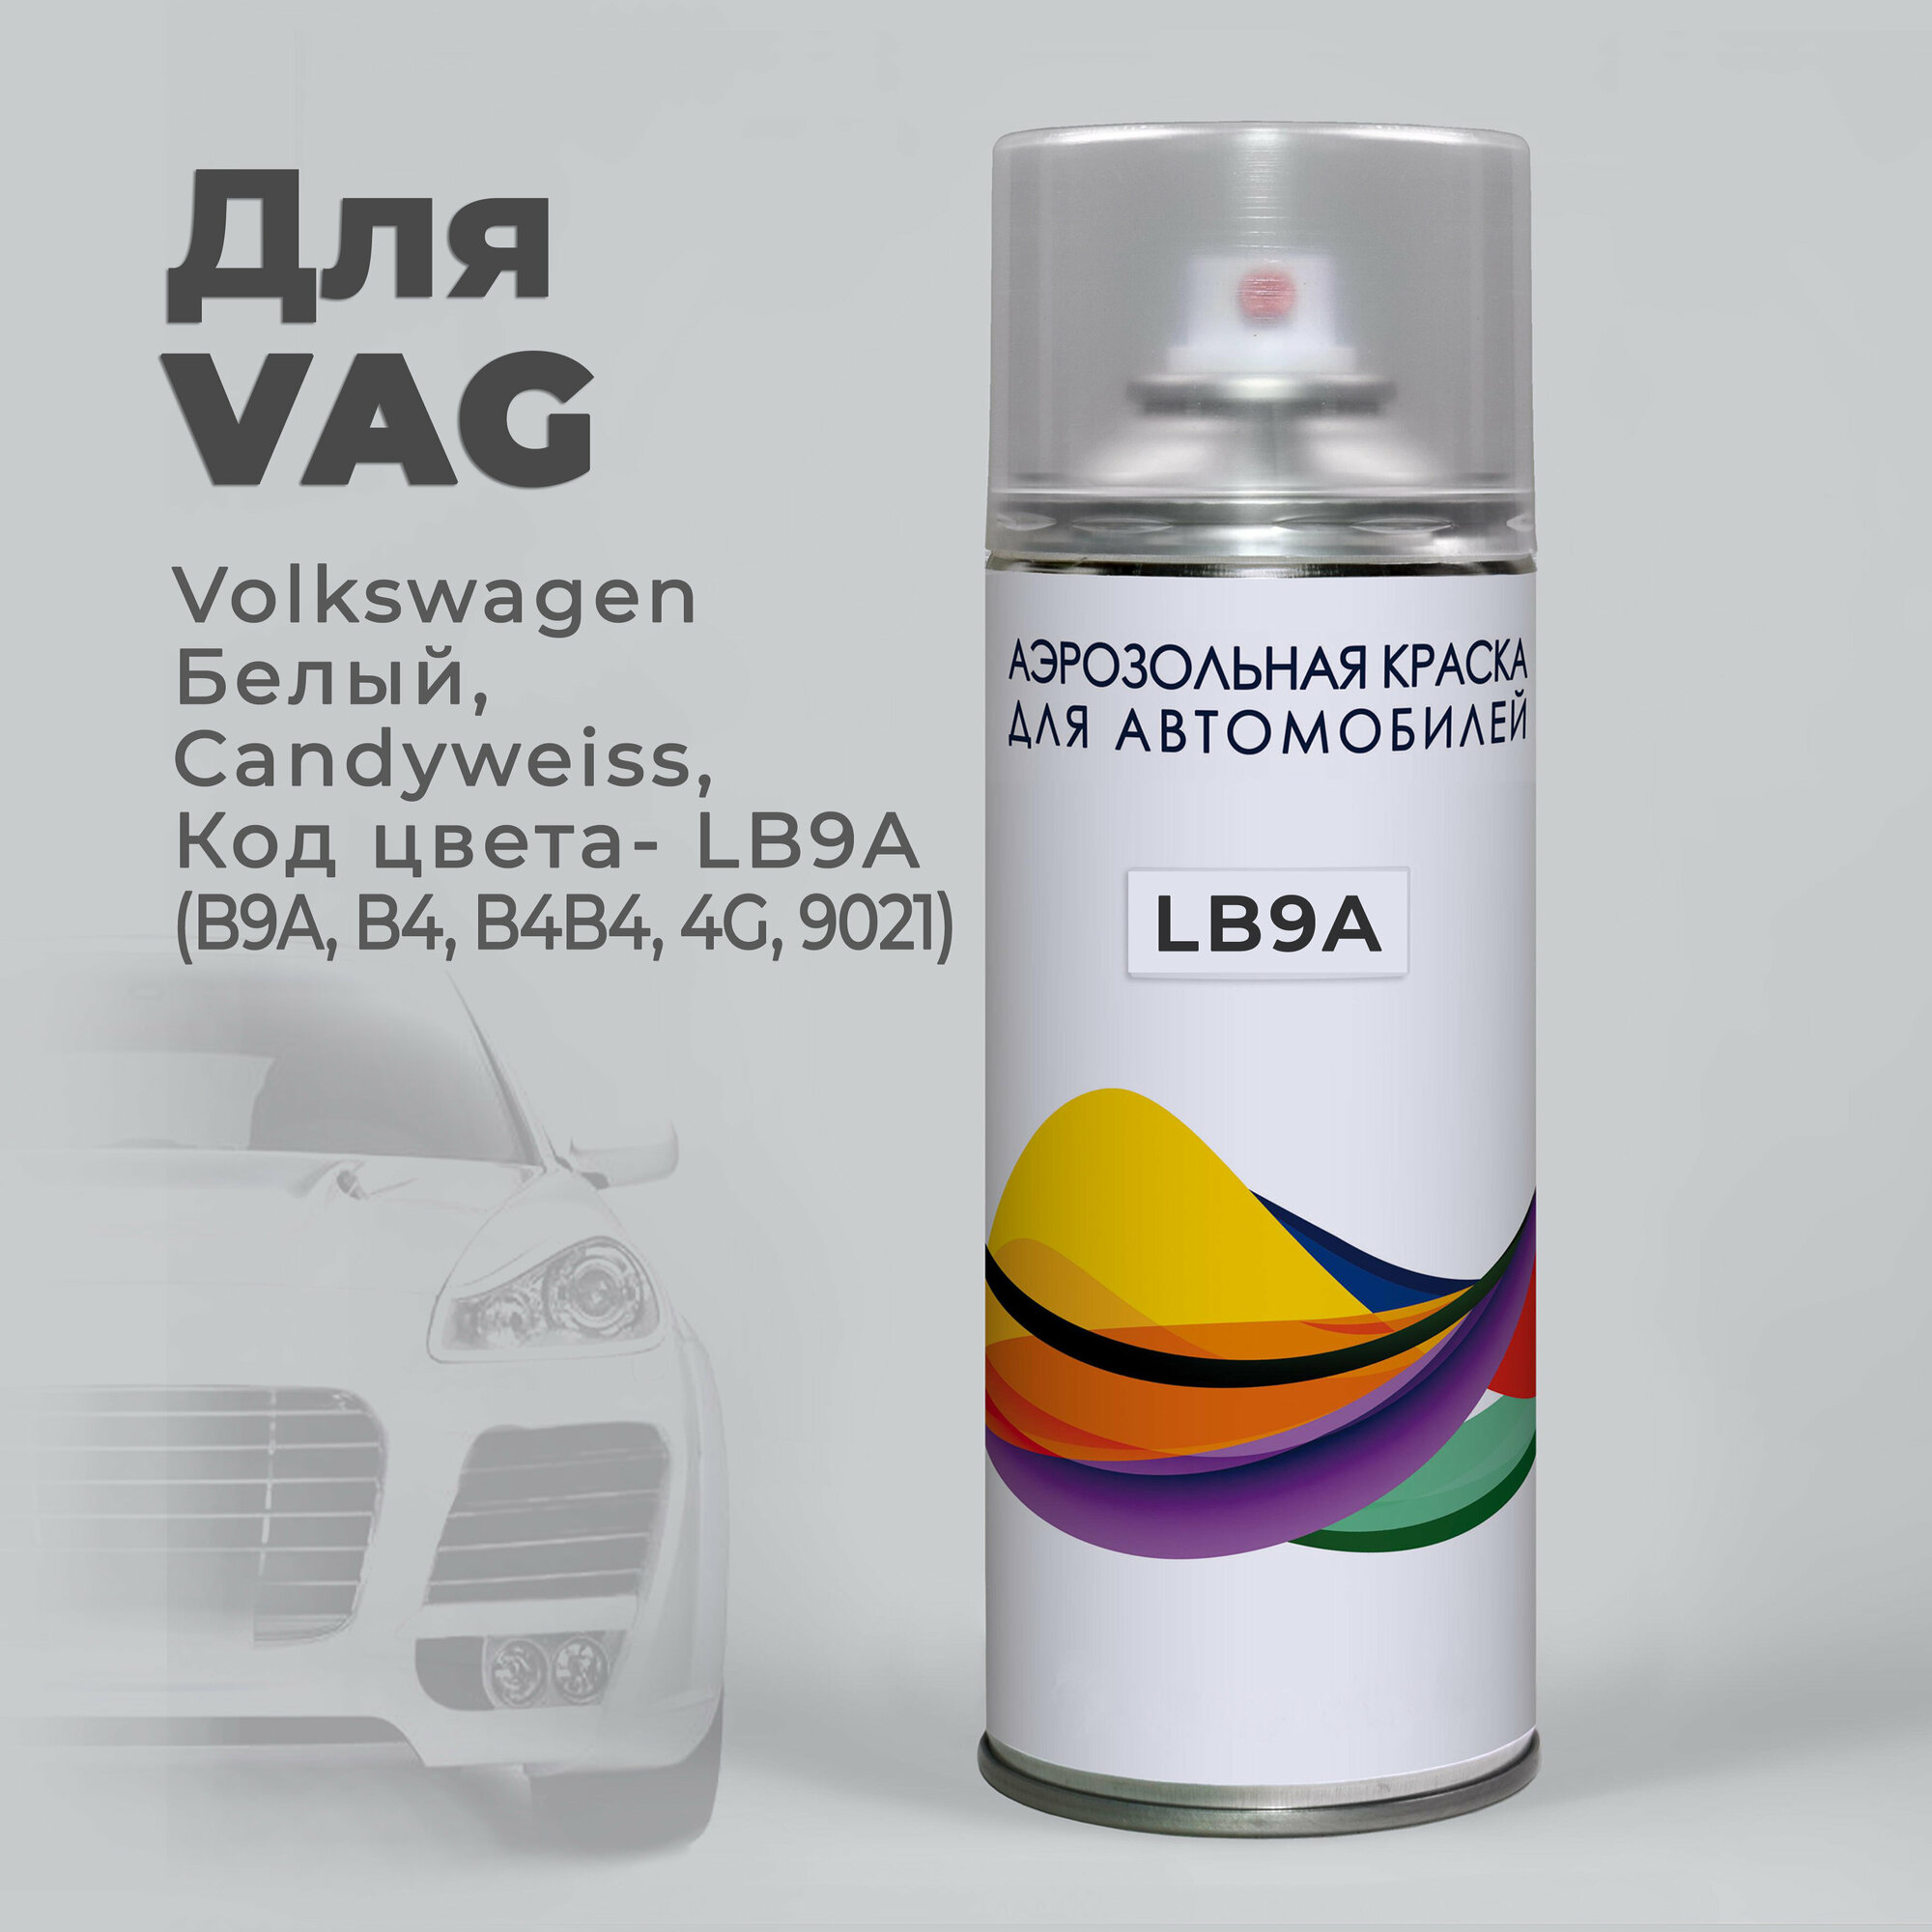 Краска-спрей, аэрозоль для авто по коду LB9A (B9A, B4, B4B4, 4G, 9021) Volkswagen Белый, Candyweiss. Аэрозольный баллон